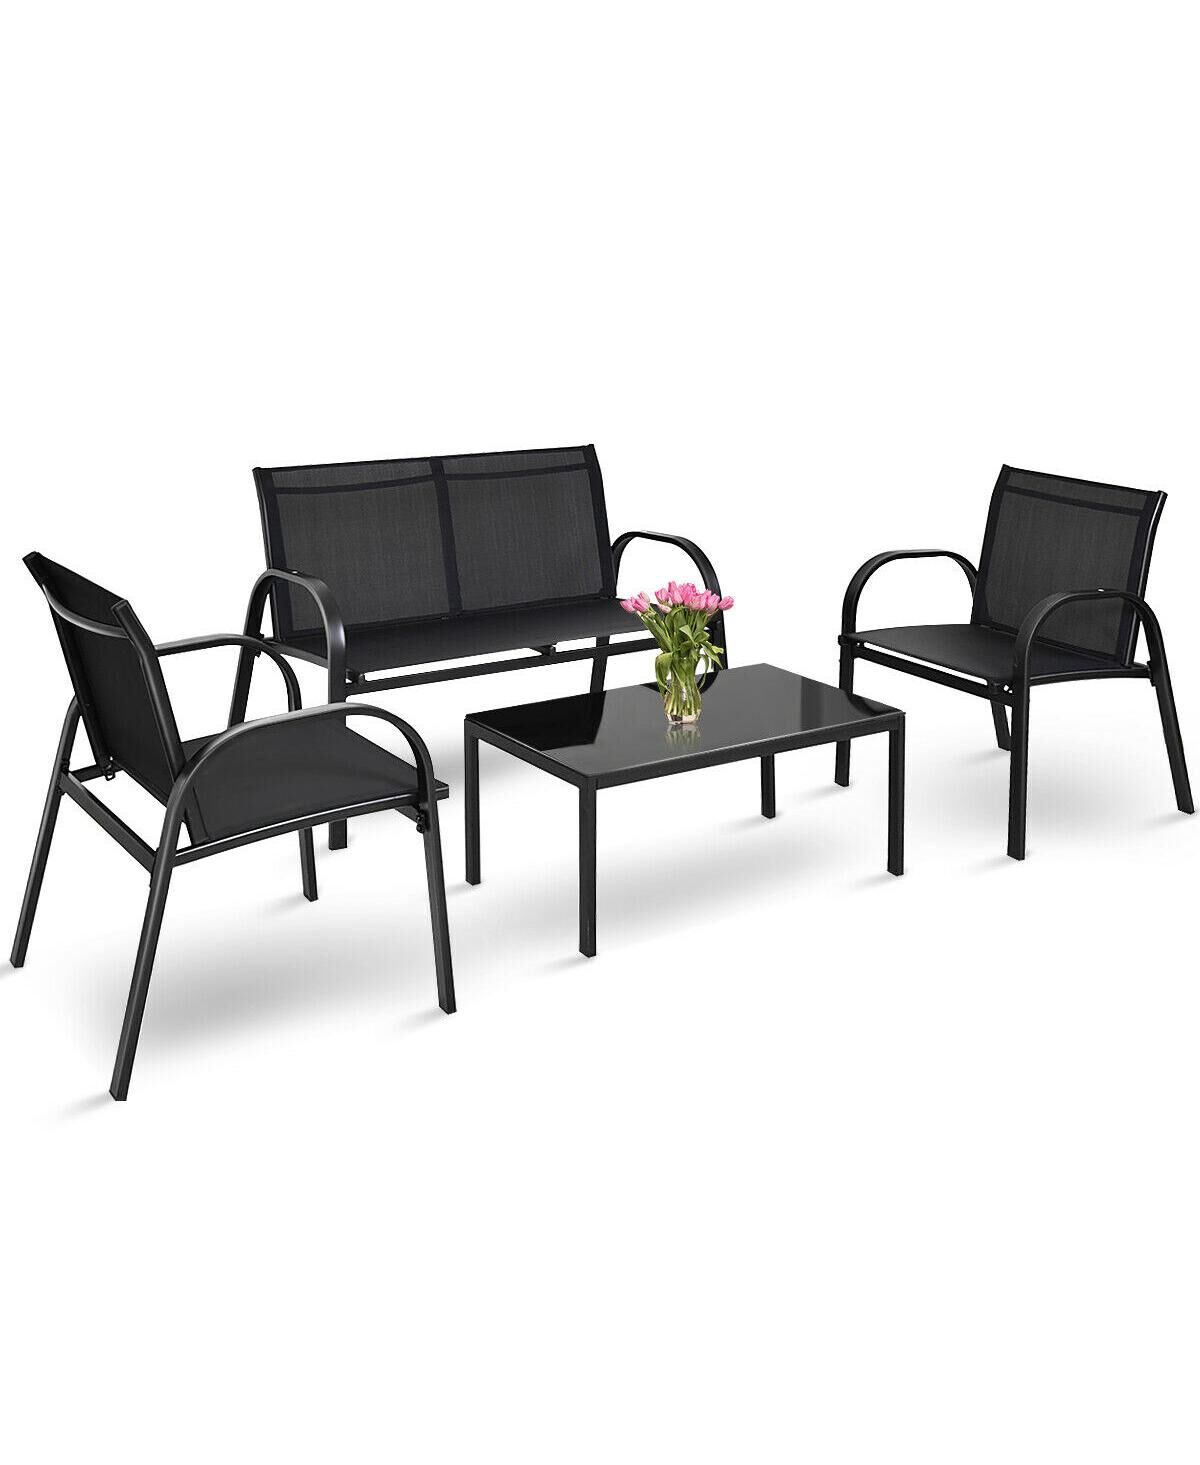 Costway 4 Pcs Patio Furniture Set Sofa Coffee Table Steel Frame Garden Deck - Black